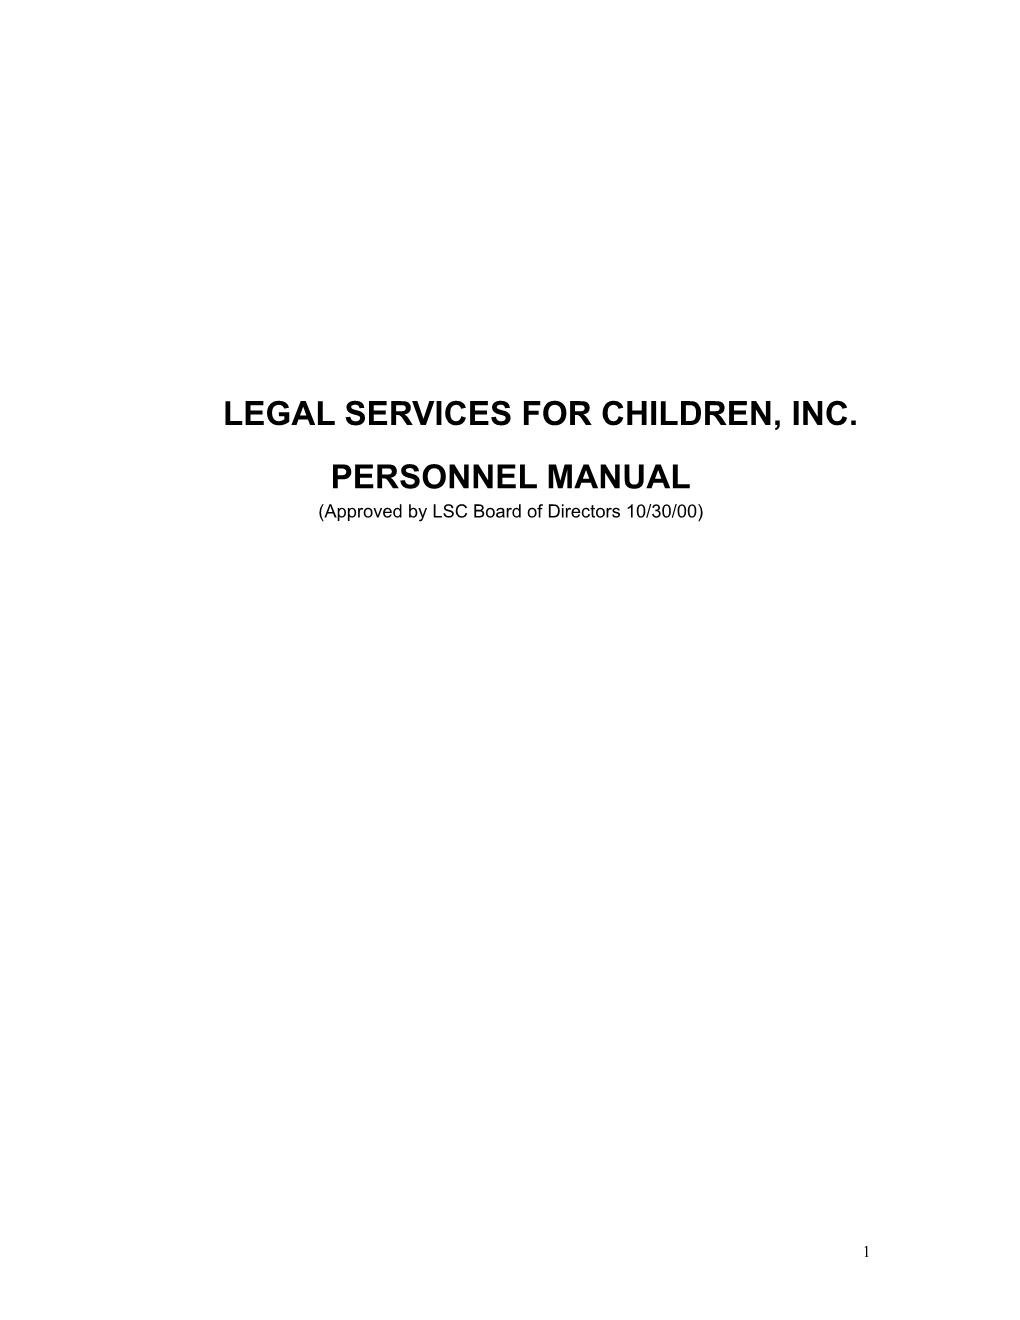 Legal Services for Children, Inc